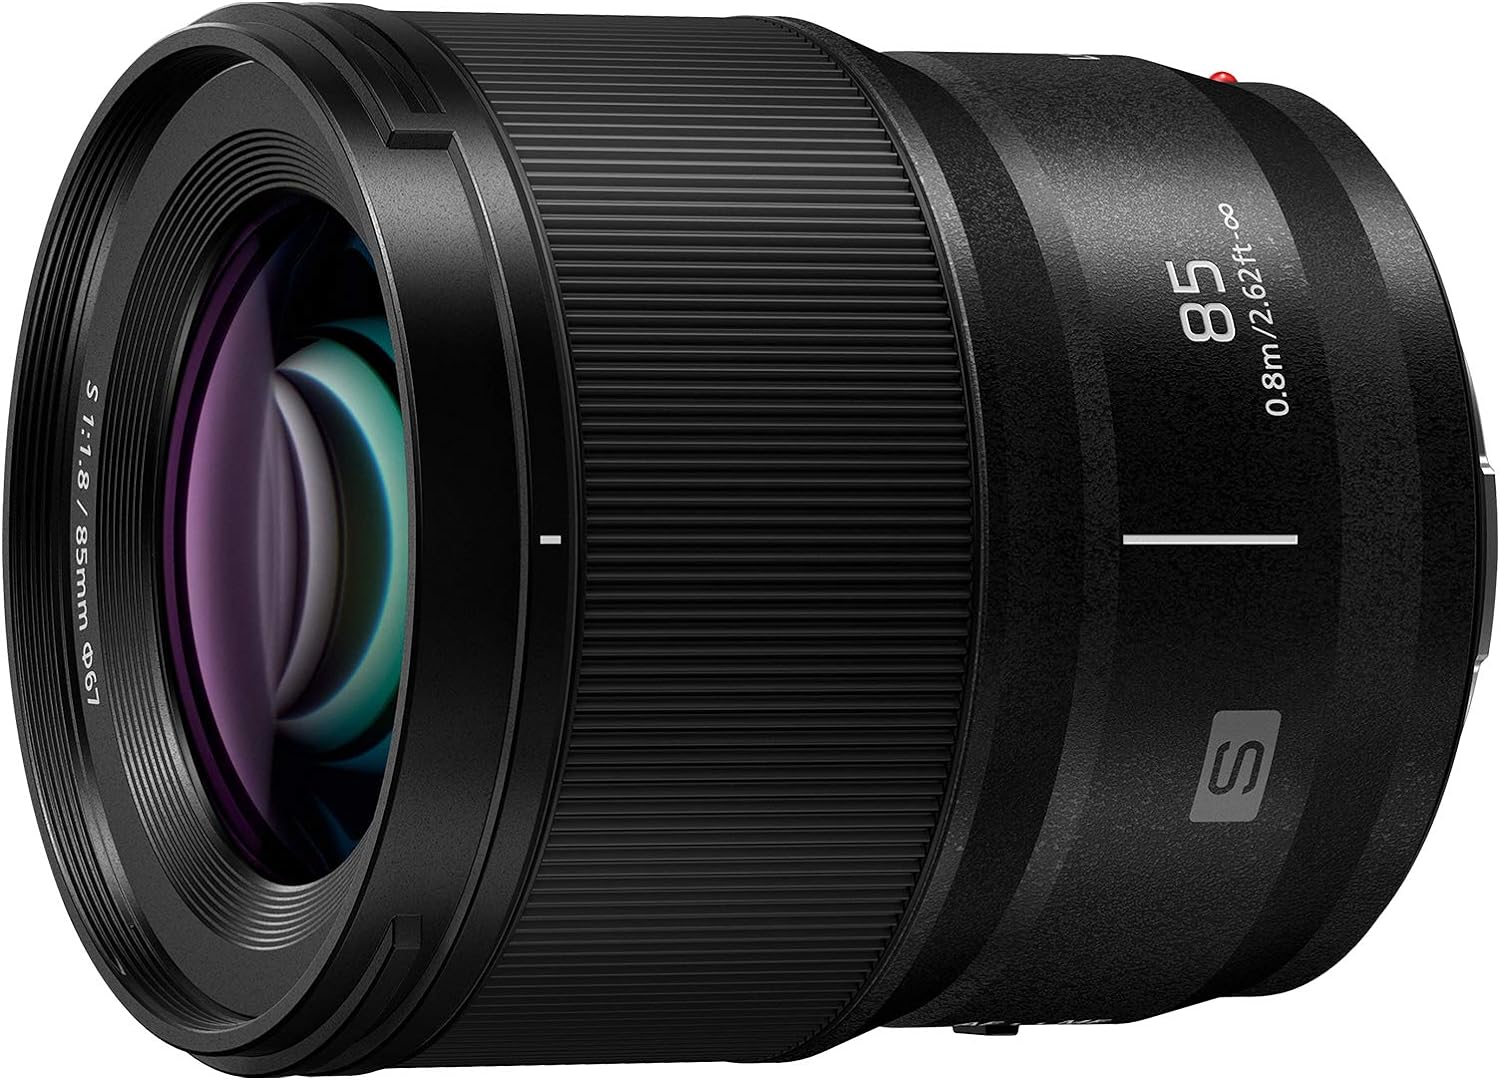 PANASONIC LUMIX S Series Camera Lens, 85mm F1.8 L Mount Interchangeable Lens for Mirrorless Full Frame Digital Cameras, S-S85, Black